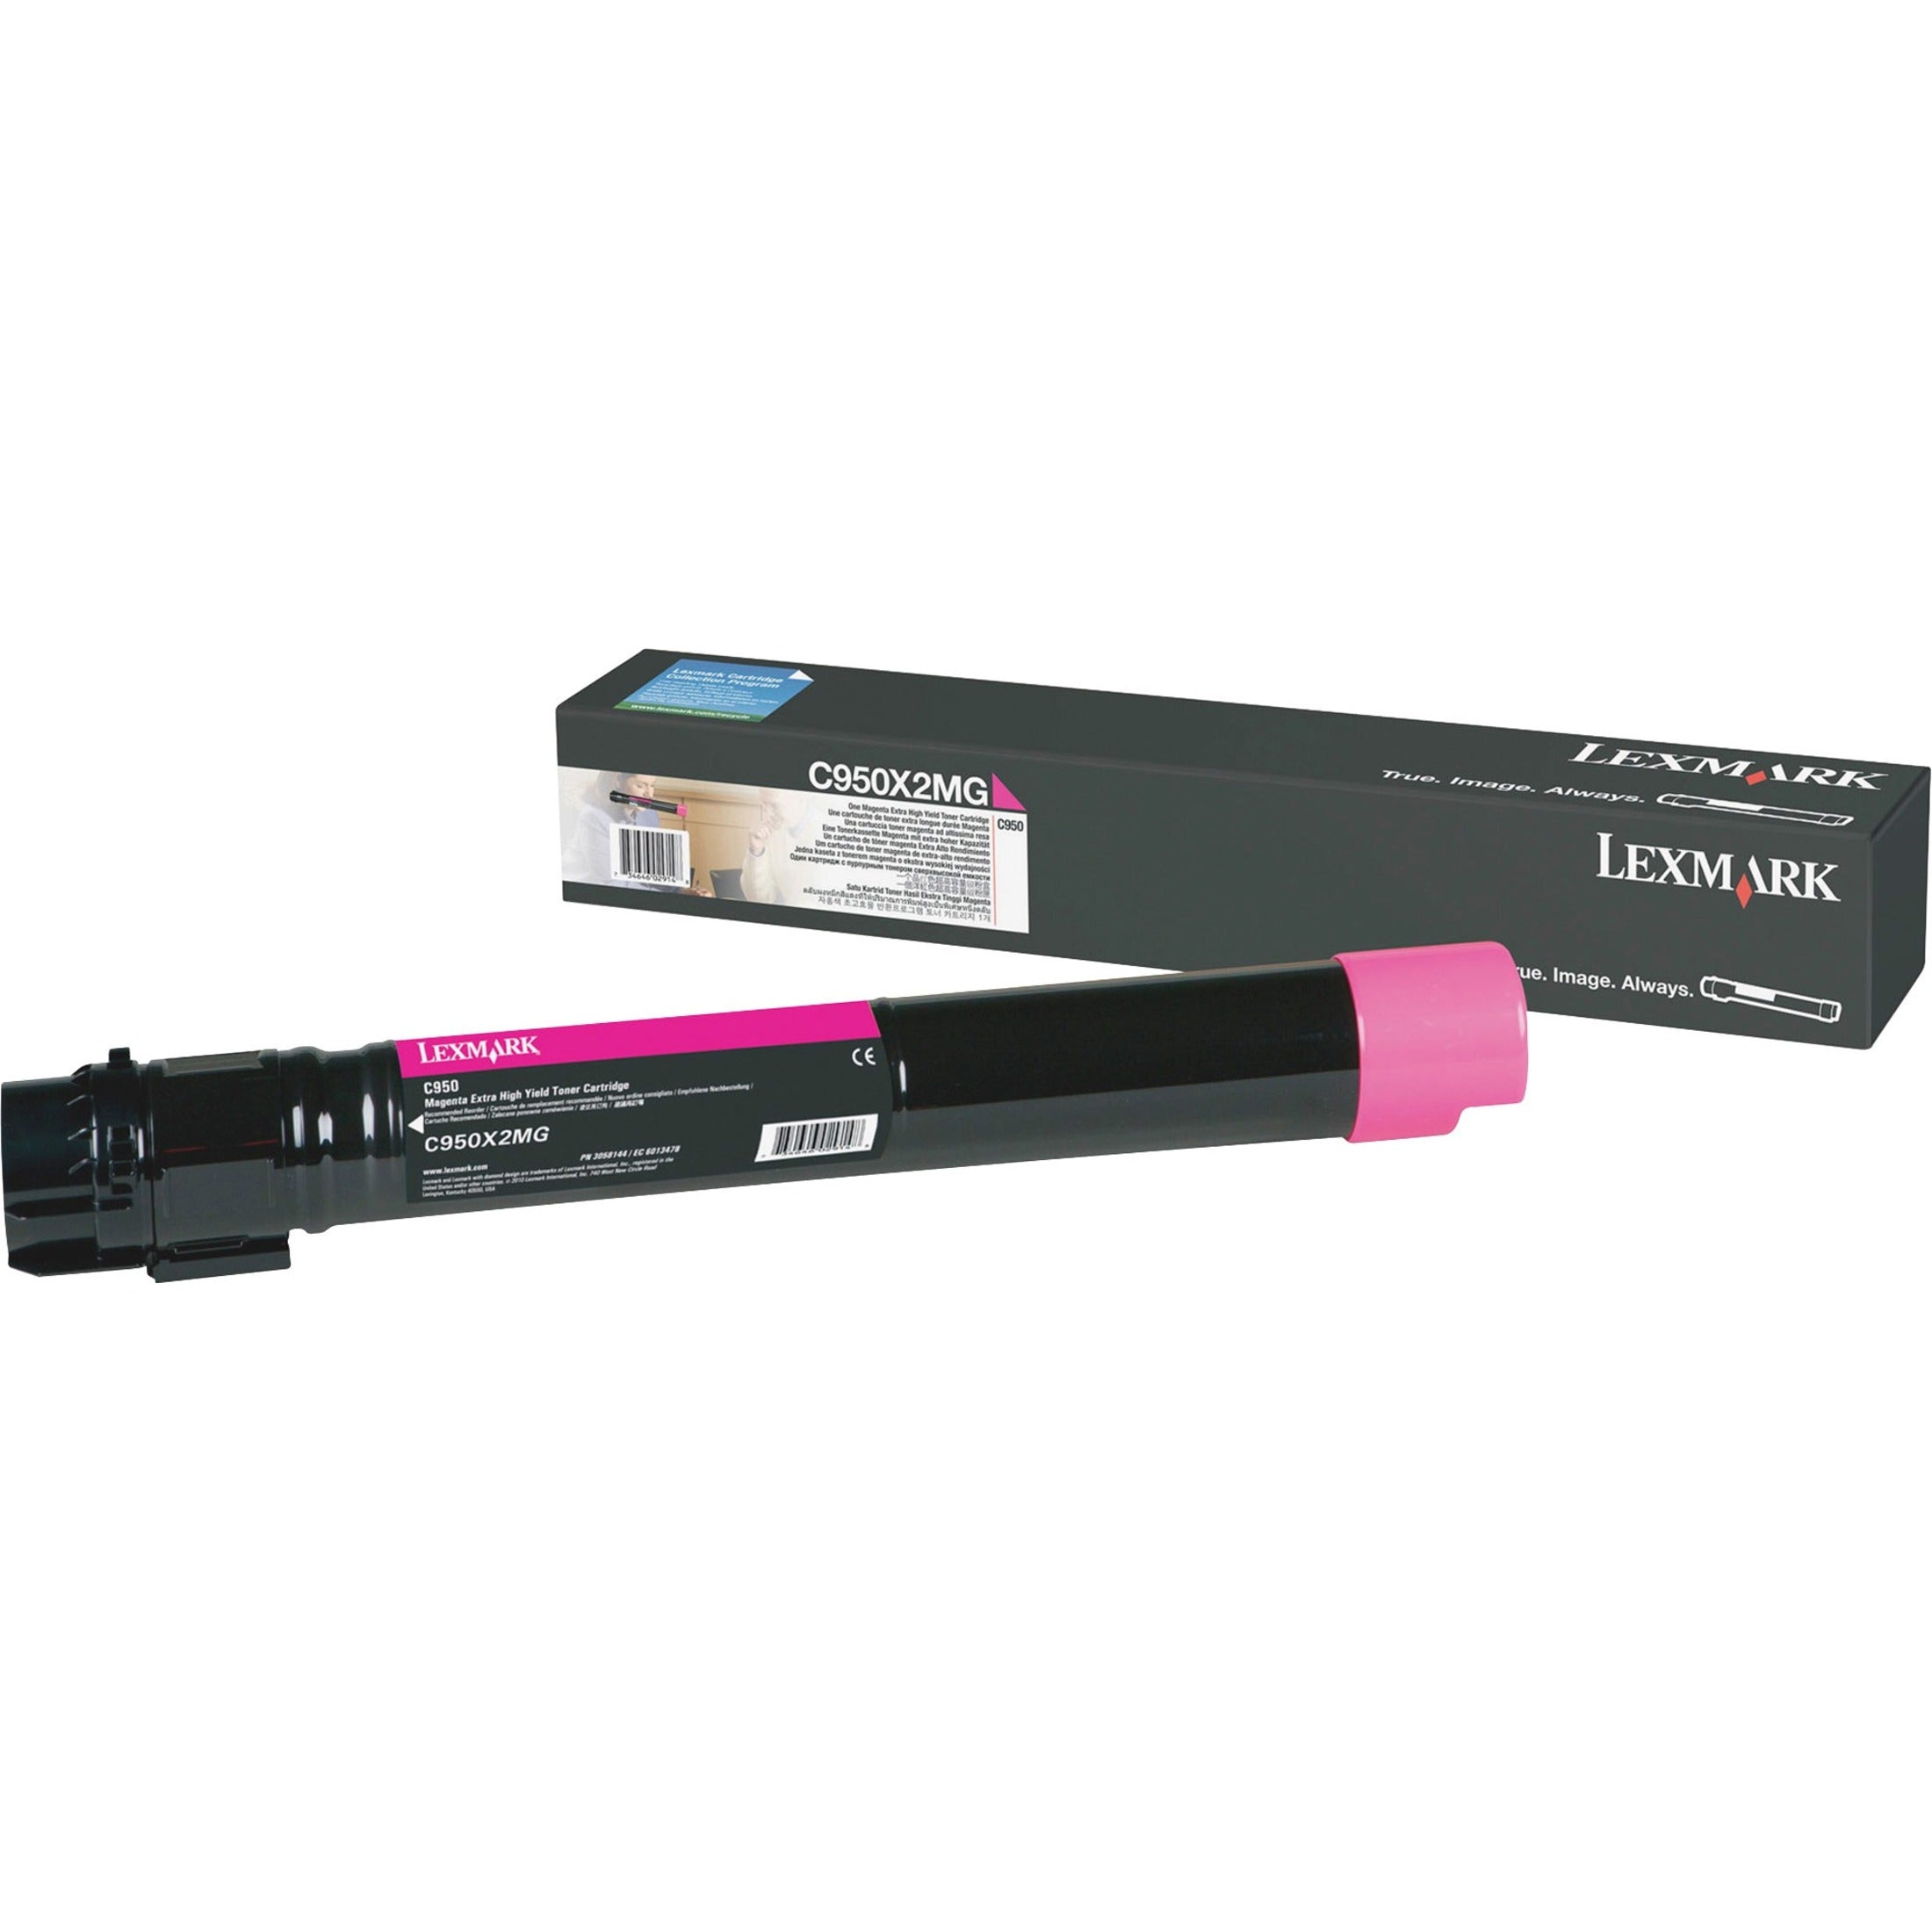 Lexmark C950X2MG C950 Extra High-yld Toner Cartridge, Magenta, 22,000 Pages Yield